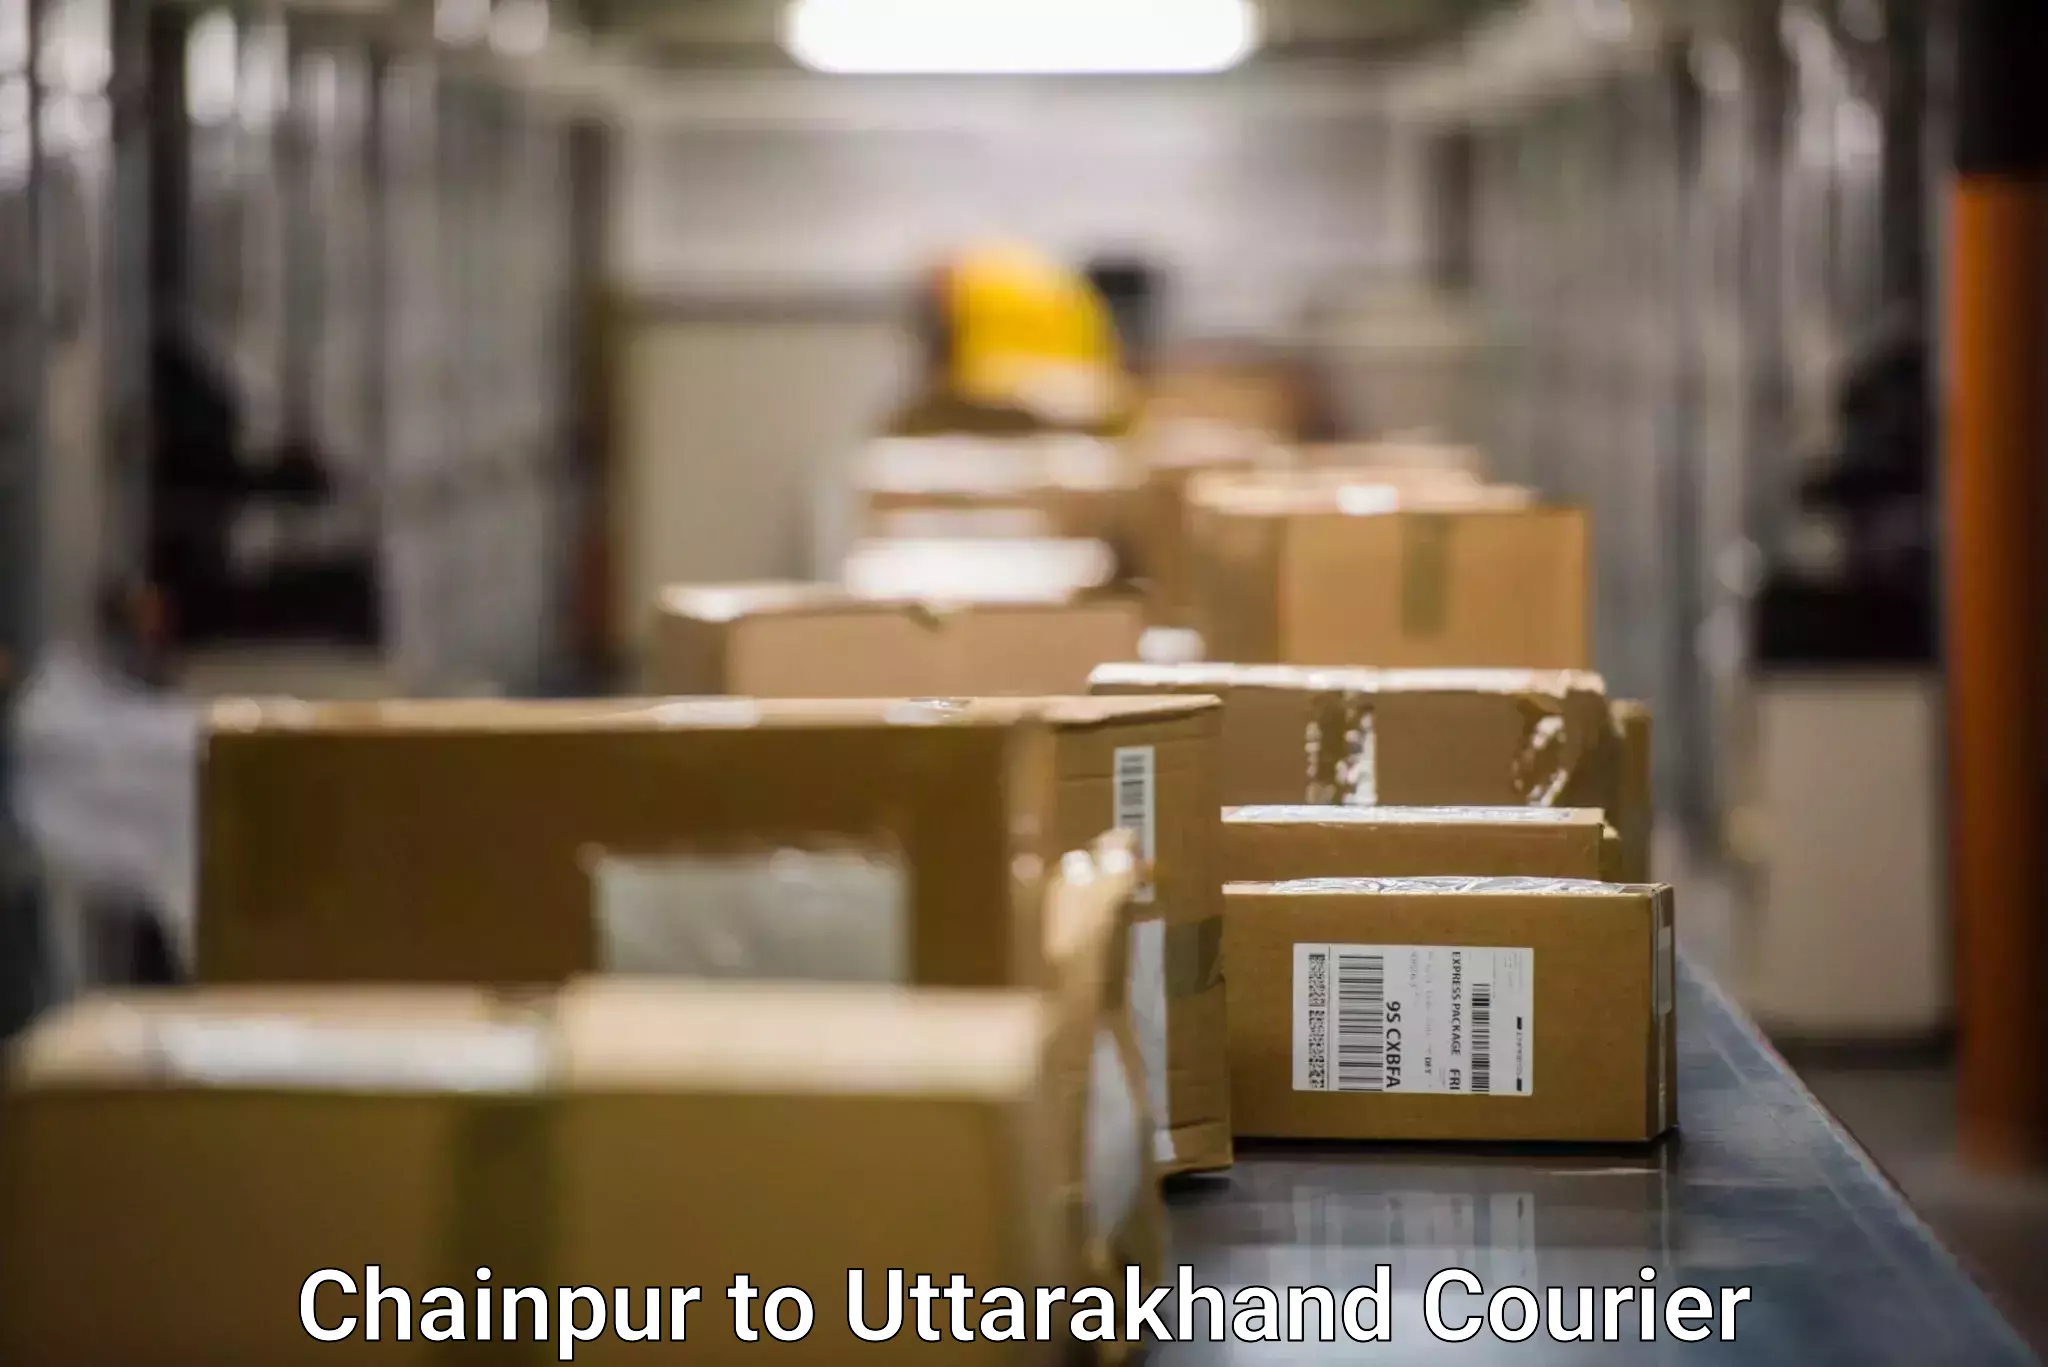 Efficient order fulfillment Chainpur to Doiwala